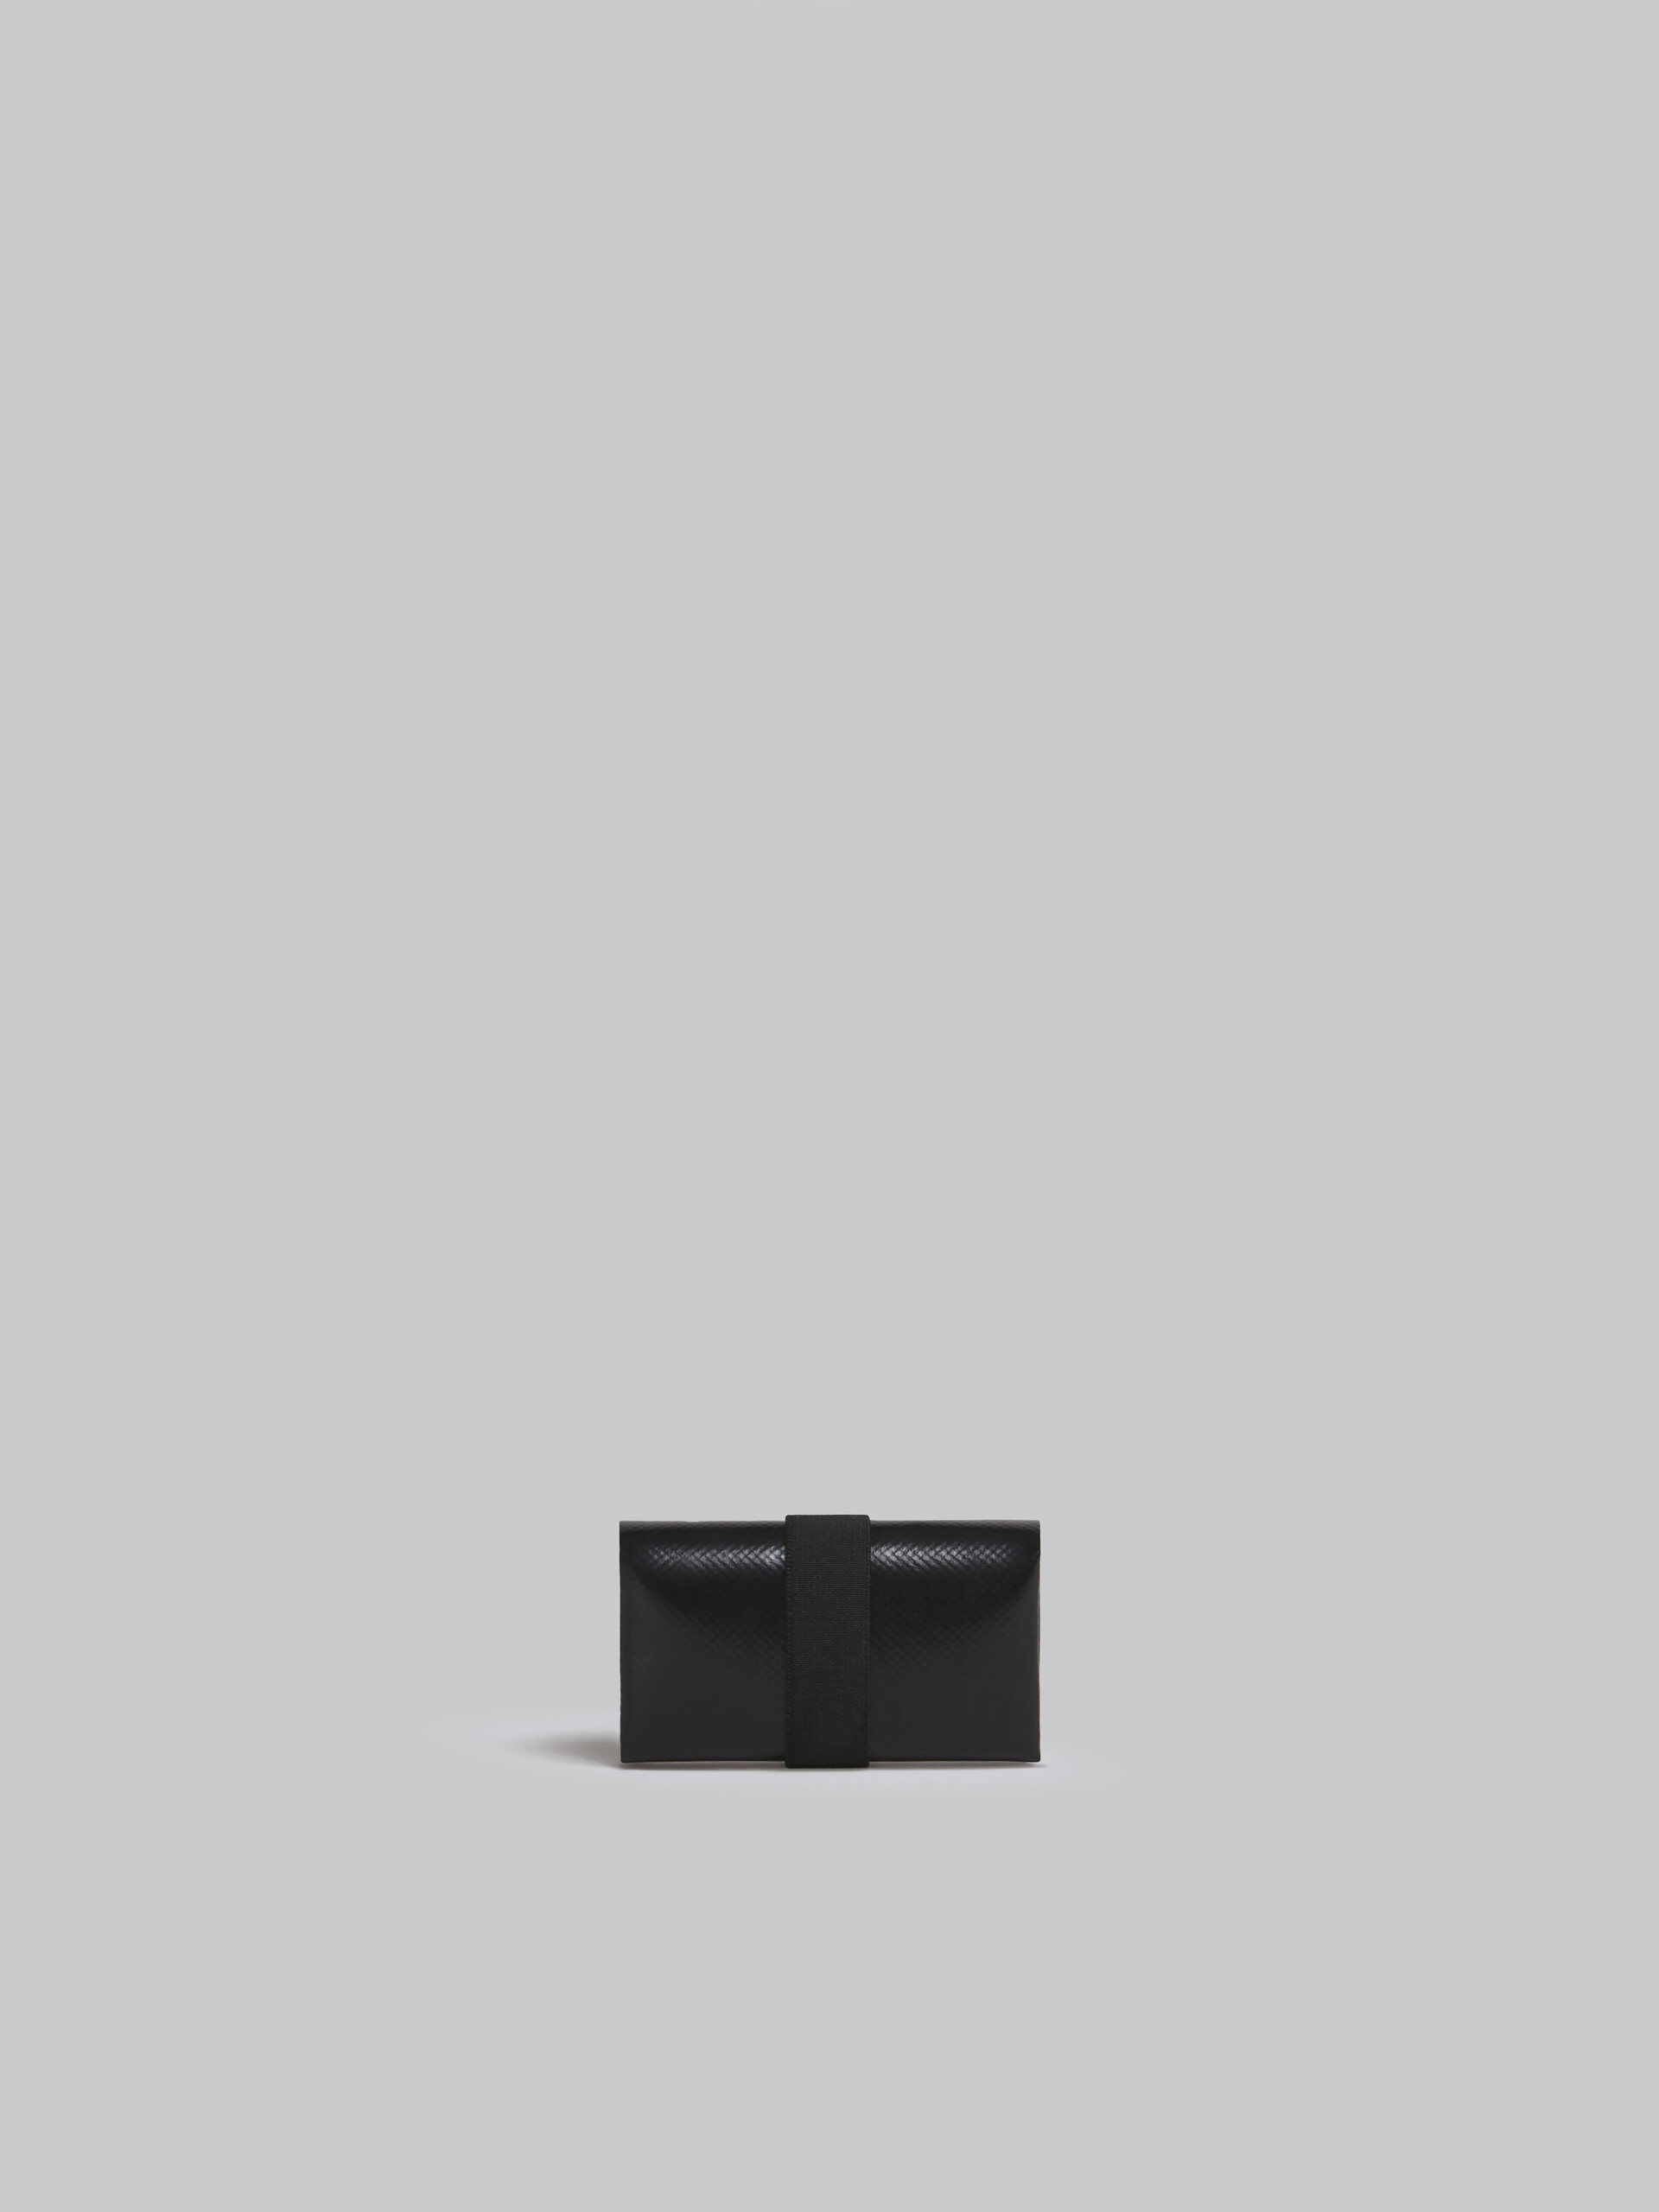 Portafoglio origami nero - Portafogli - Image 3